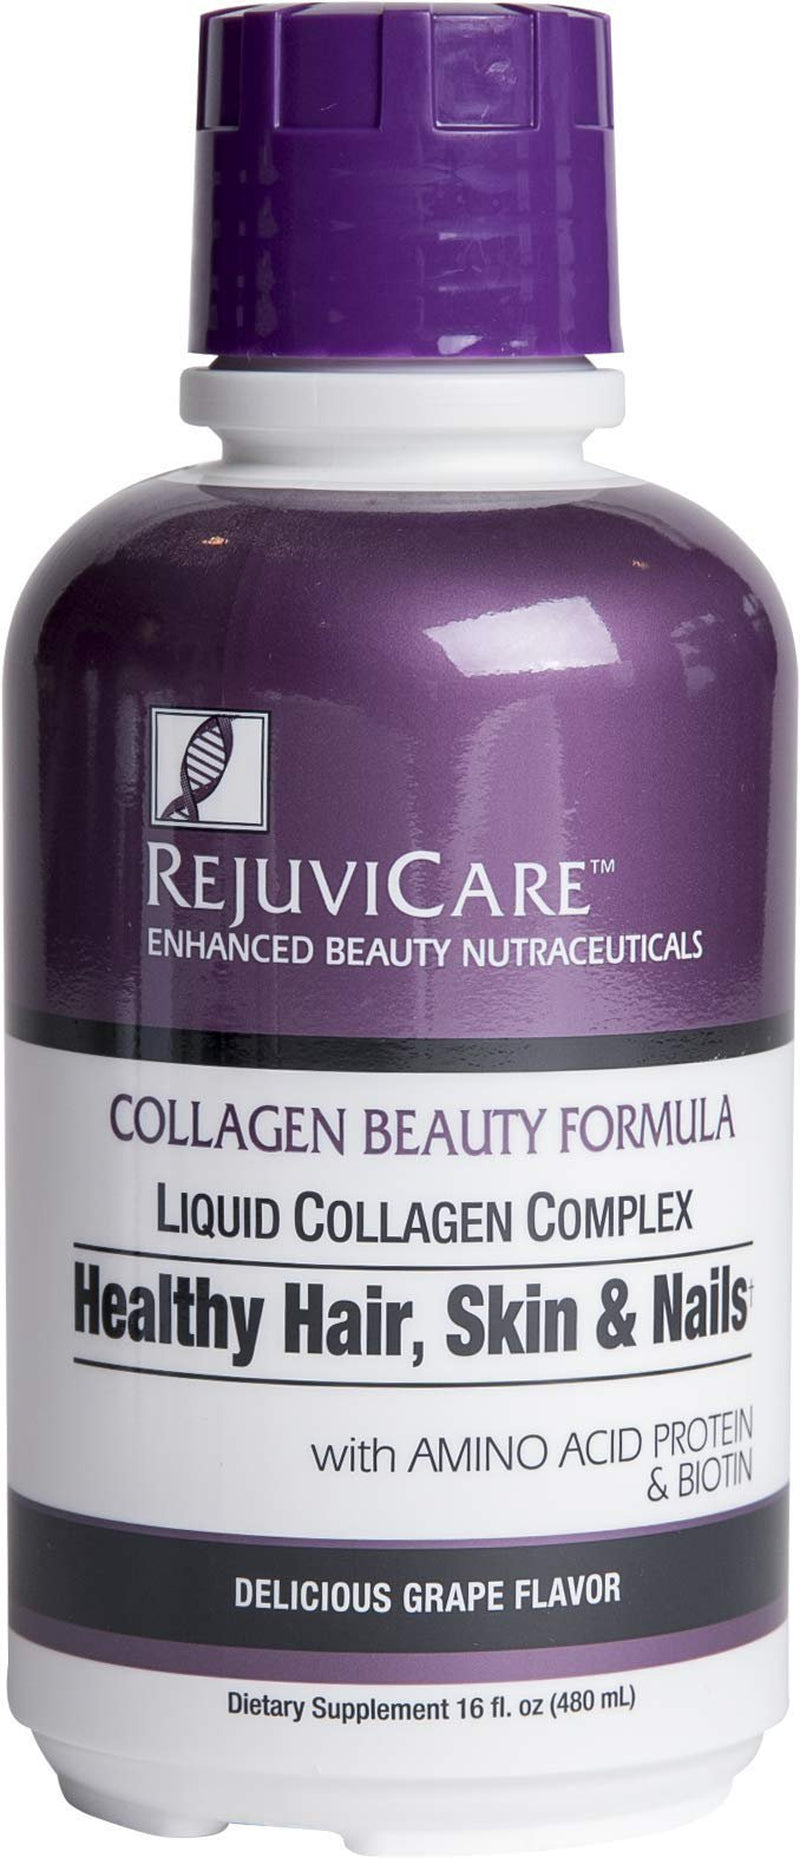 Rejuvicare Liquid Collagen Beauty Formula with Amino Acids, Protein and Biotin, Delicious Grape Flavor, Purple 16 Oz ,32 Servings